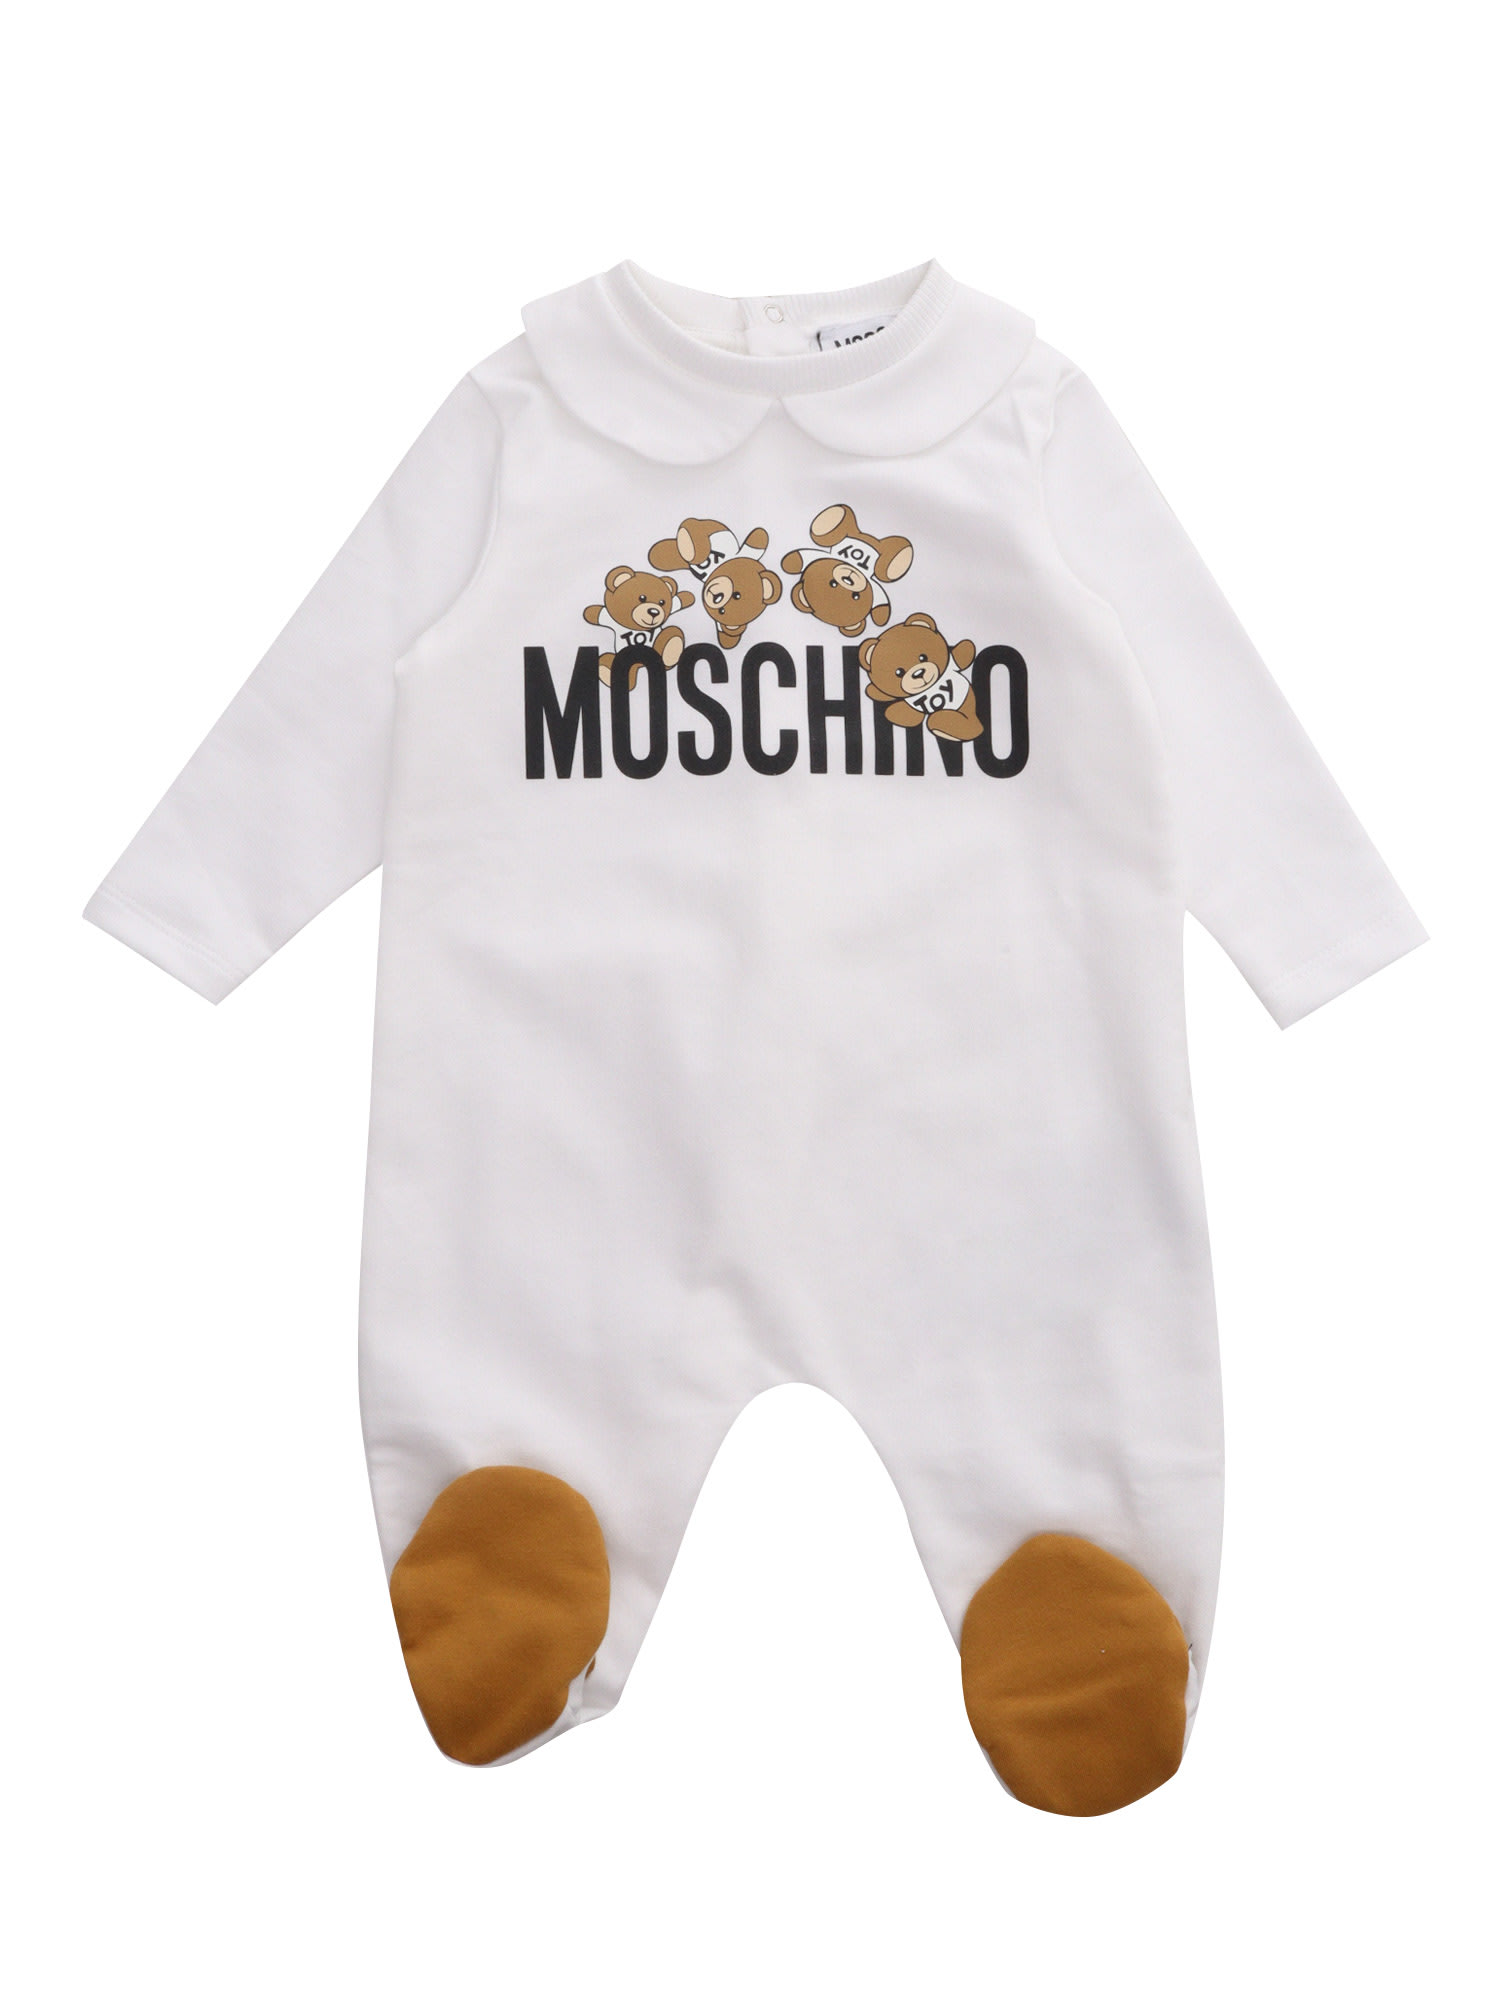 Moschino Babies' White Playsuite